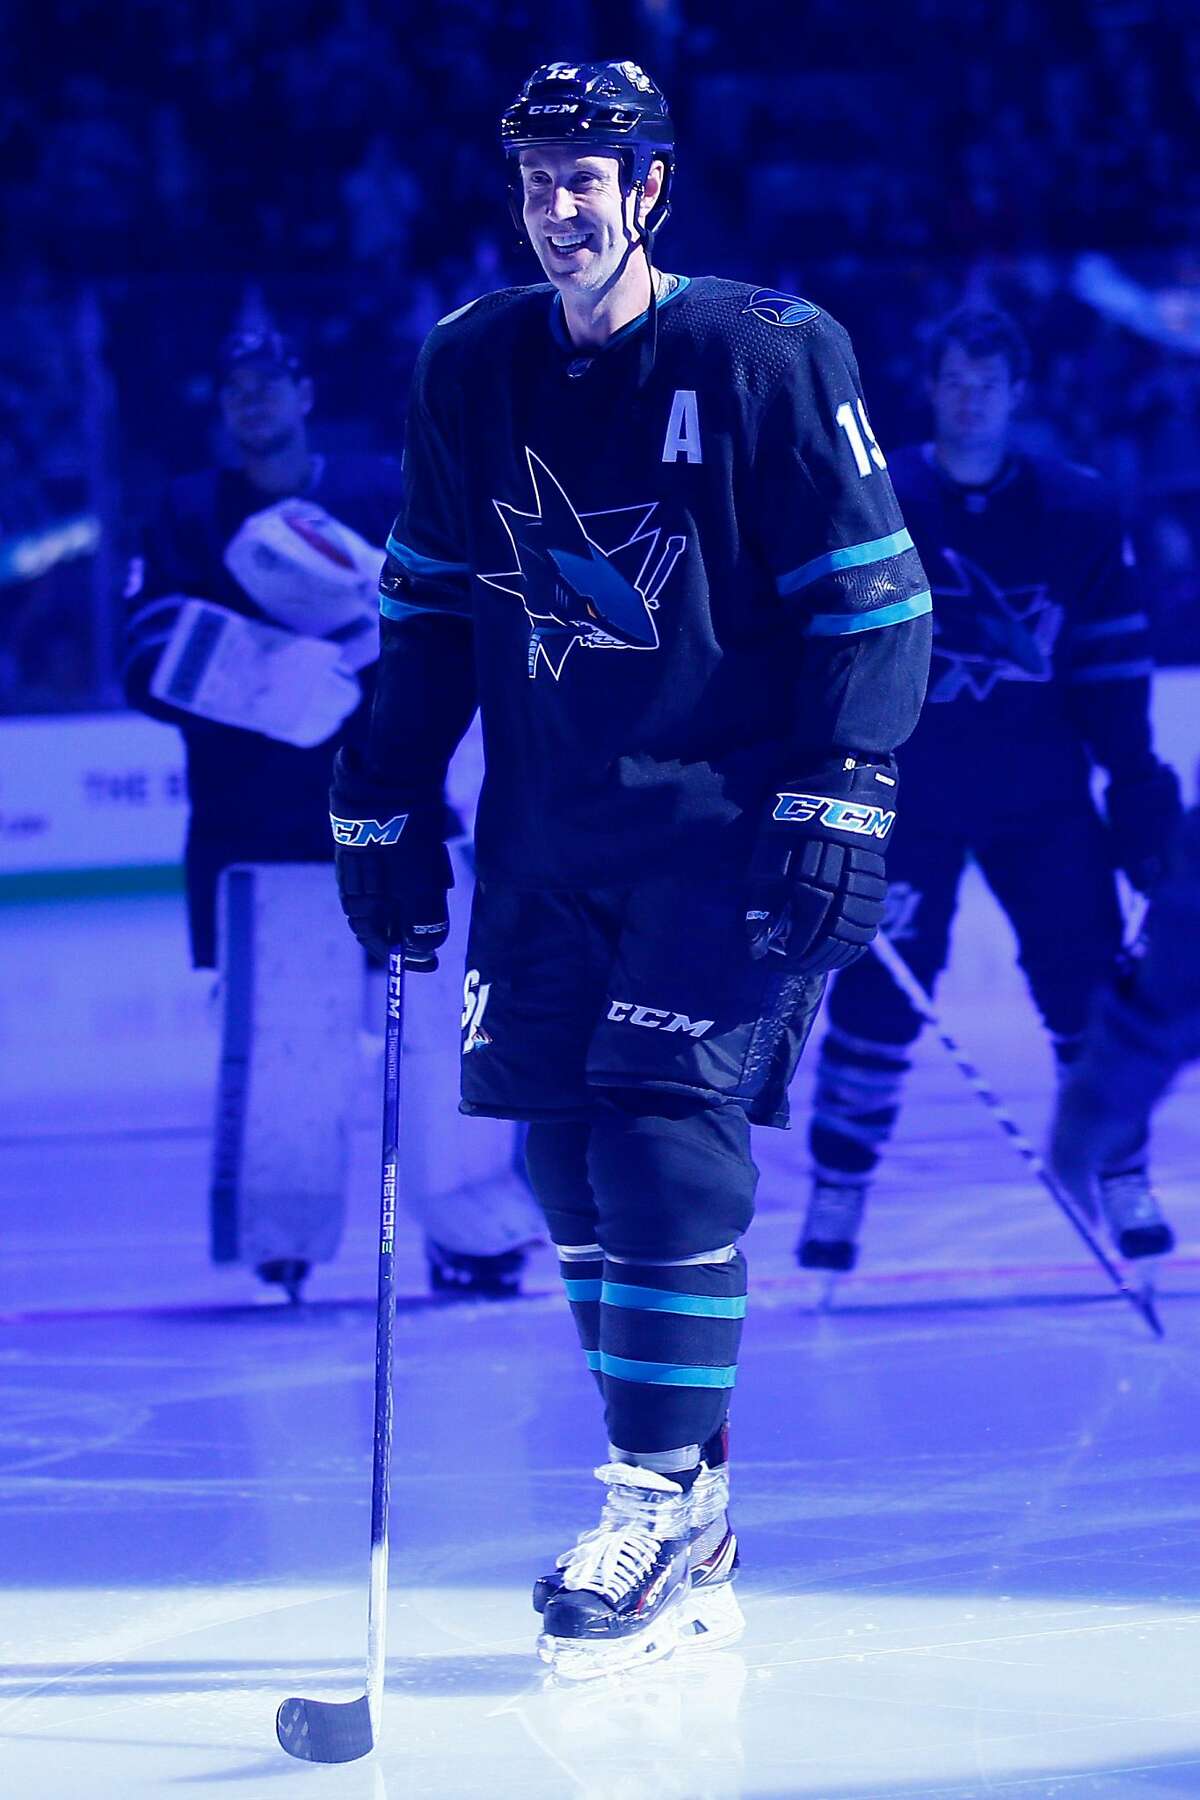 Joe Thornton joins Toronto Maple Leafs, ends SJ Sharks era